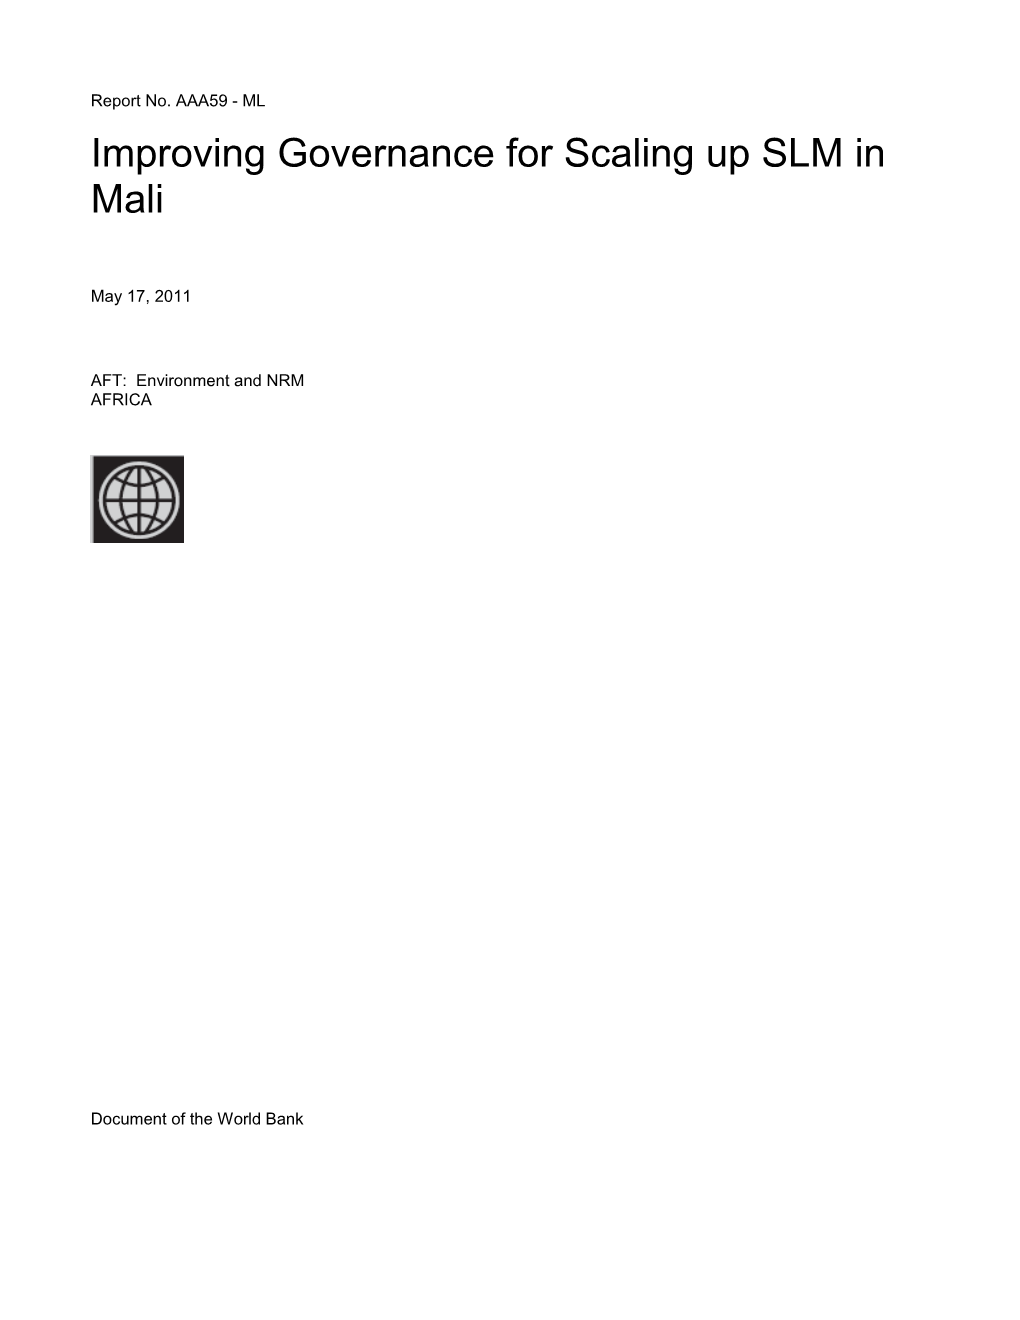 Improving Governance for Scaling up SLM in Mali